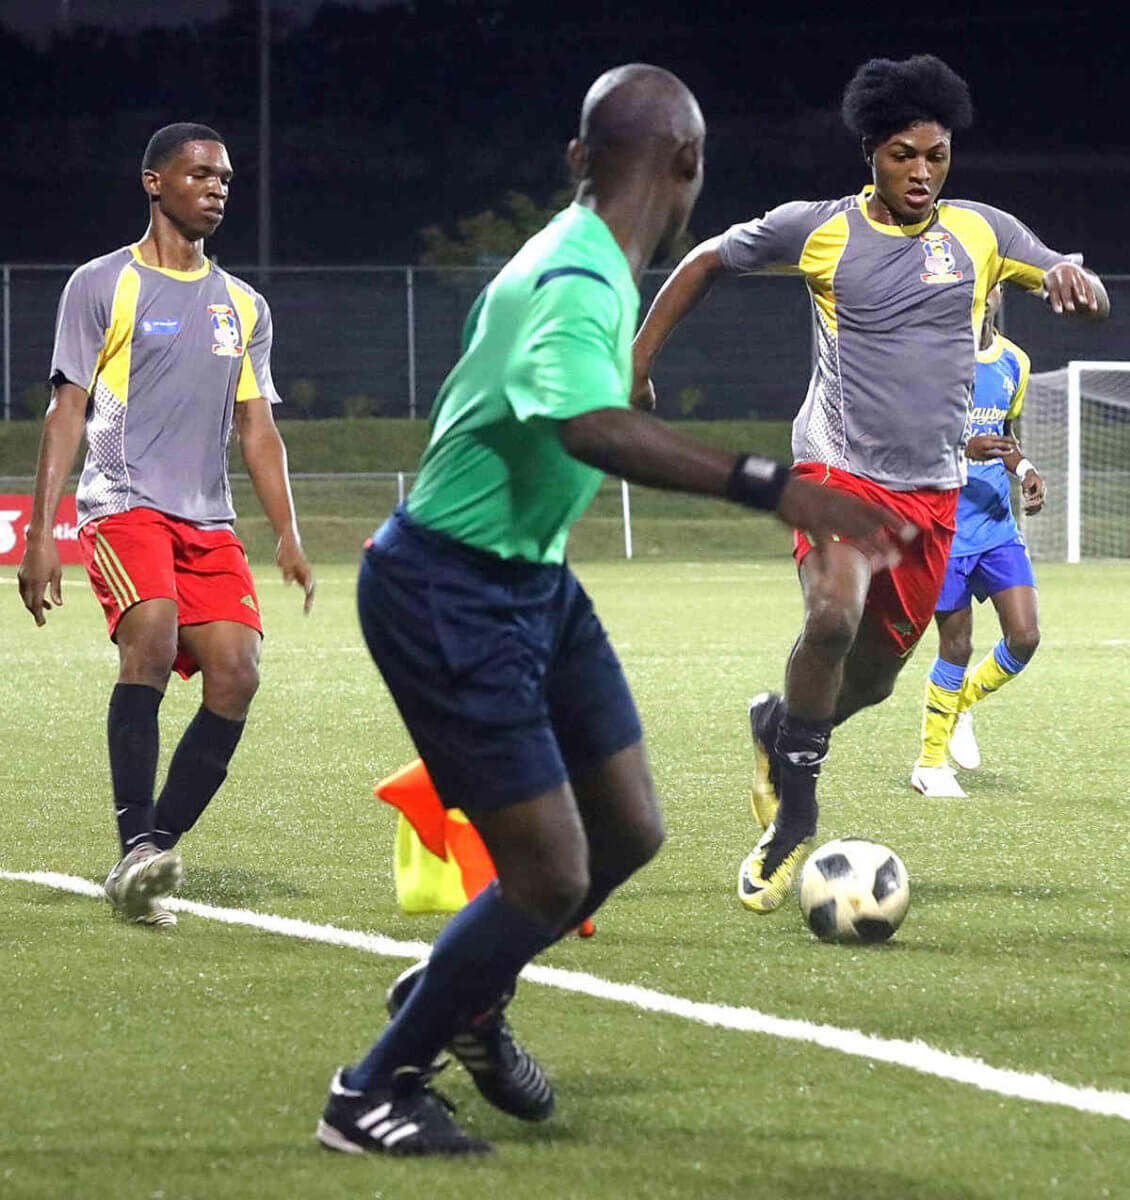 A thriller in Barbados football